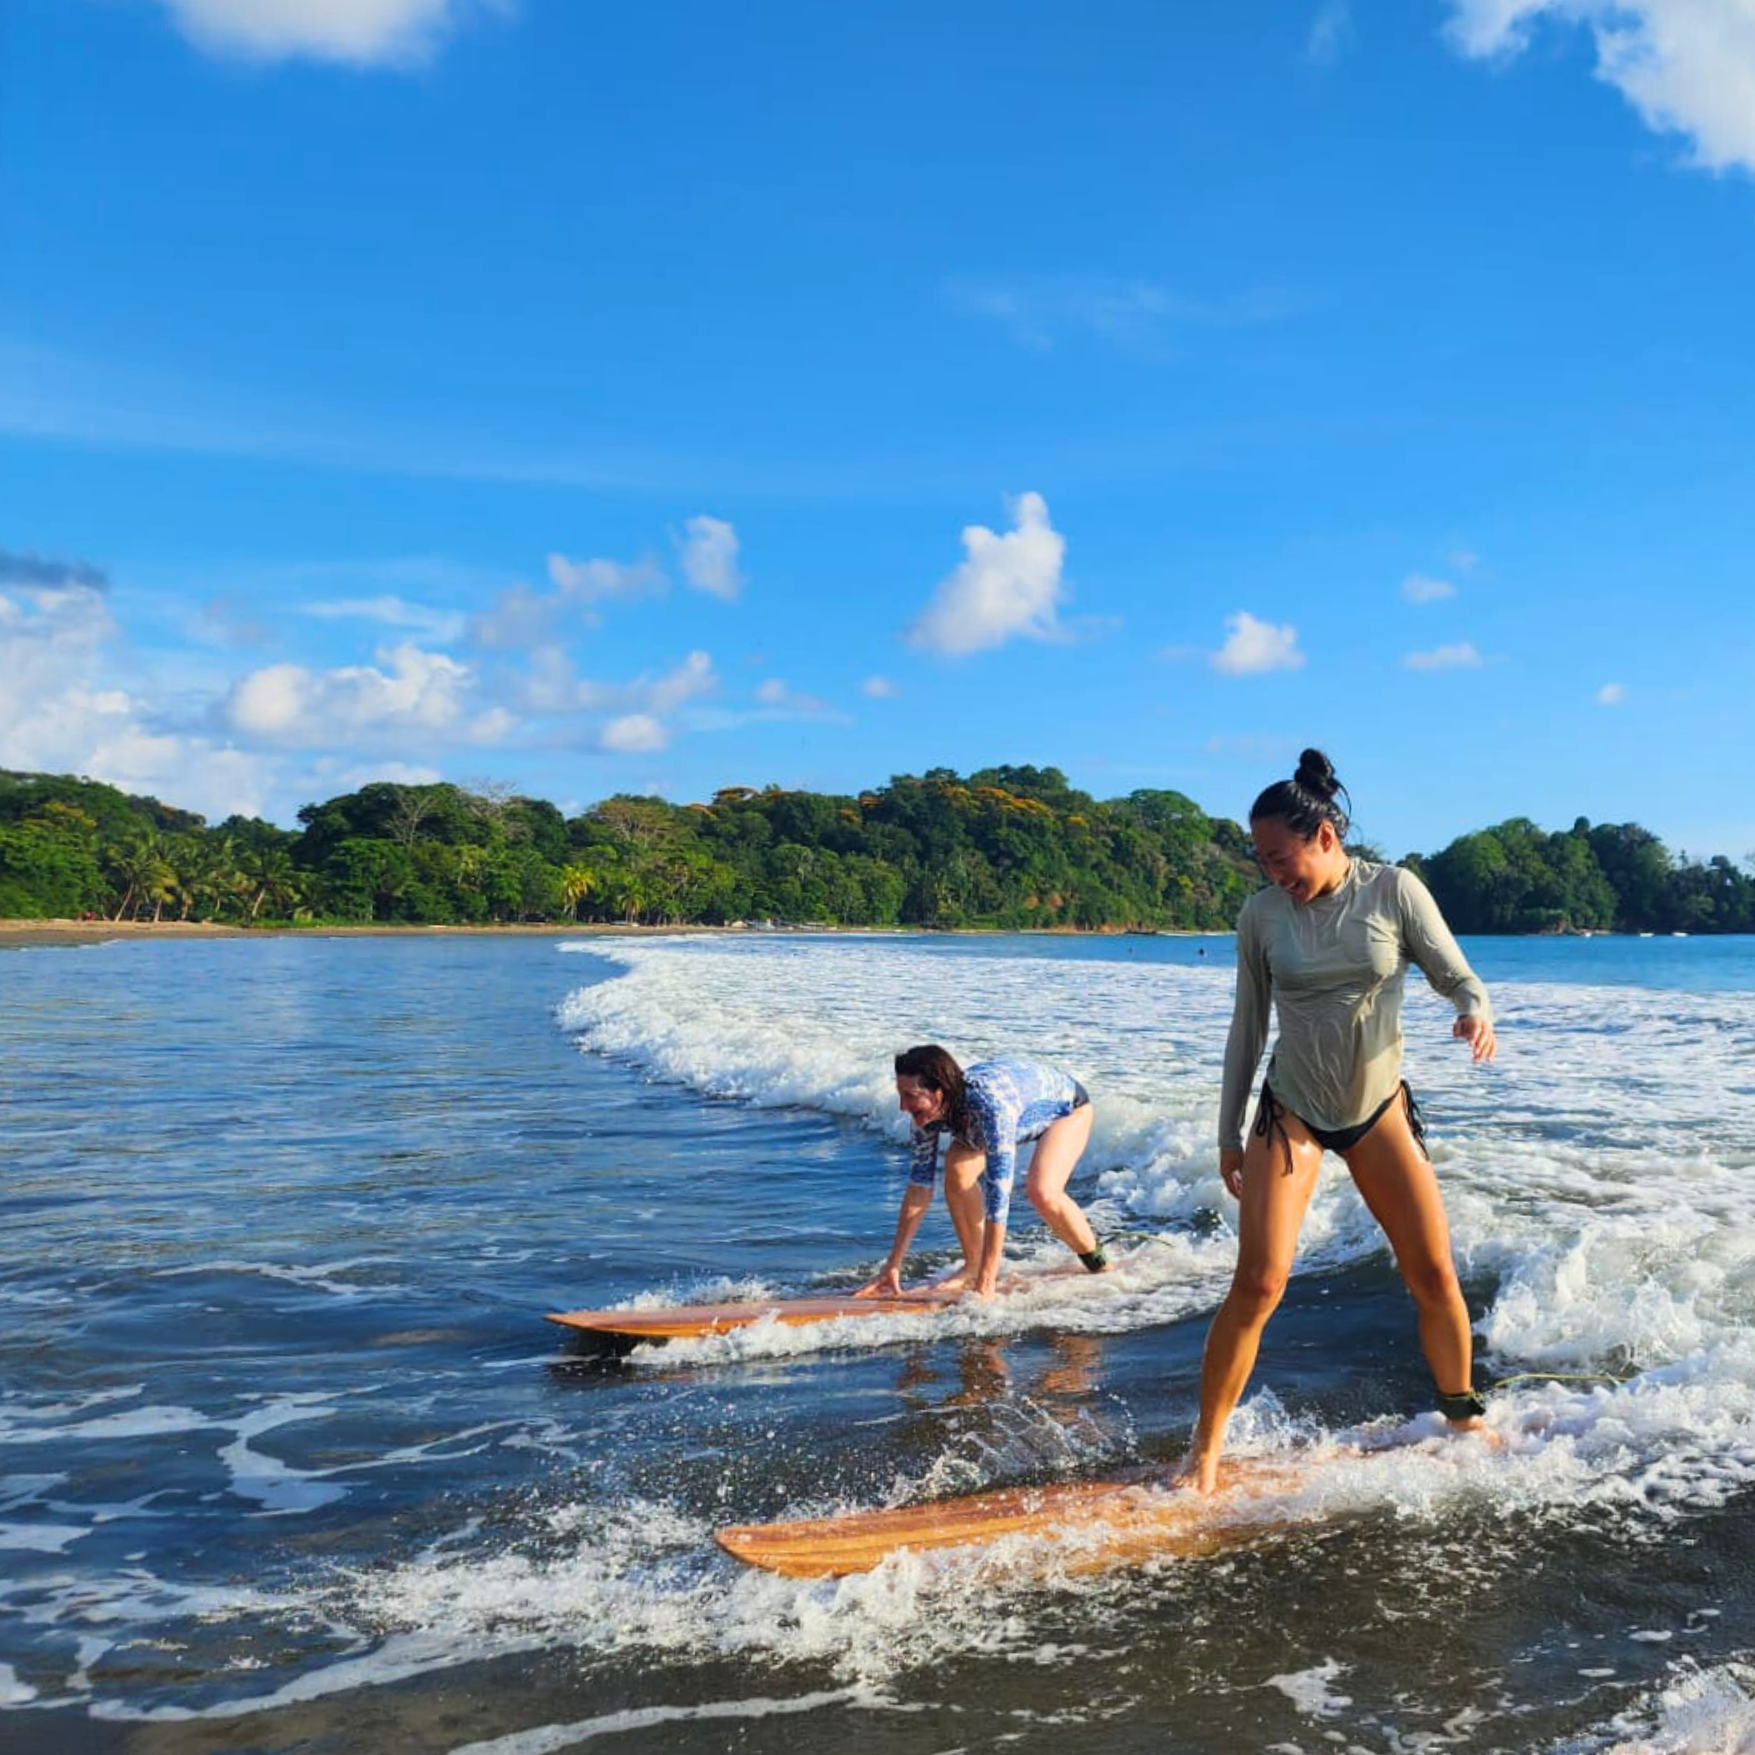 Surf With Amigas Costa Rica